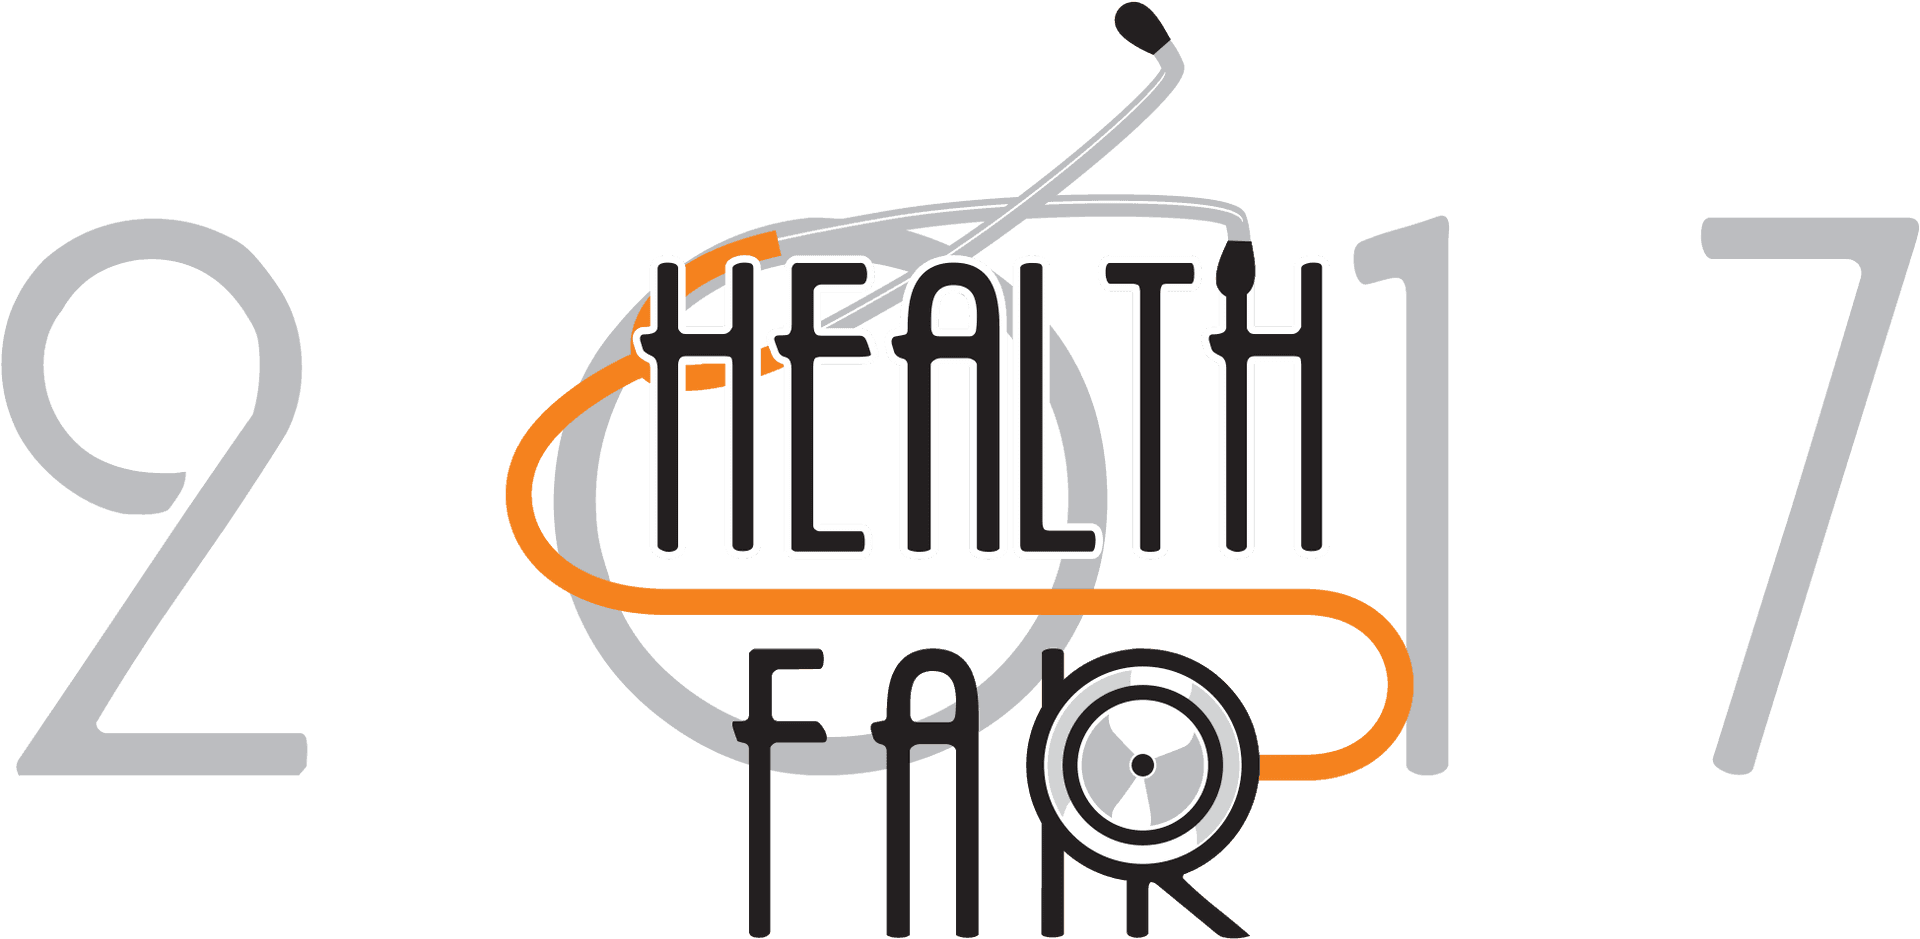 Health Fair Event Logo2023 PNG image